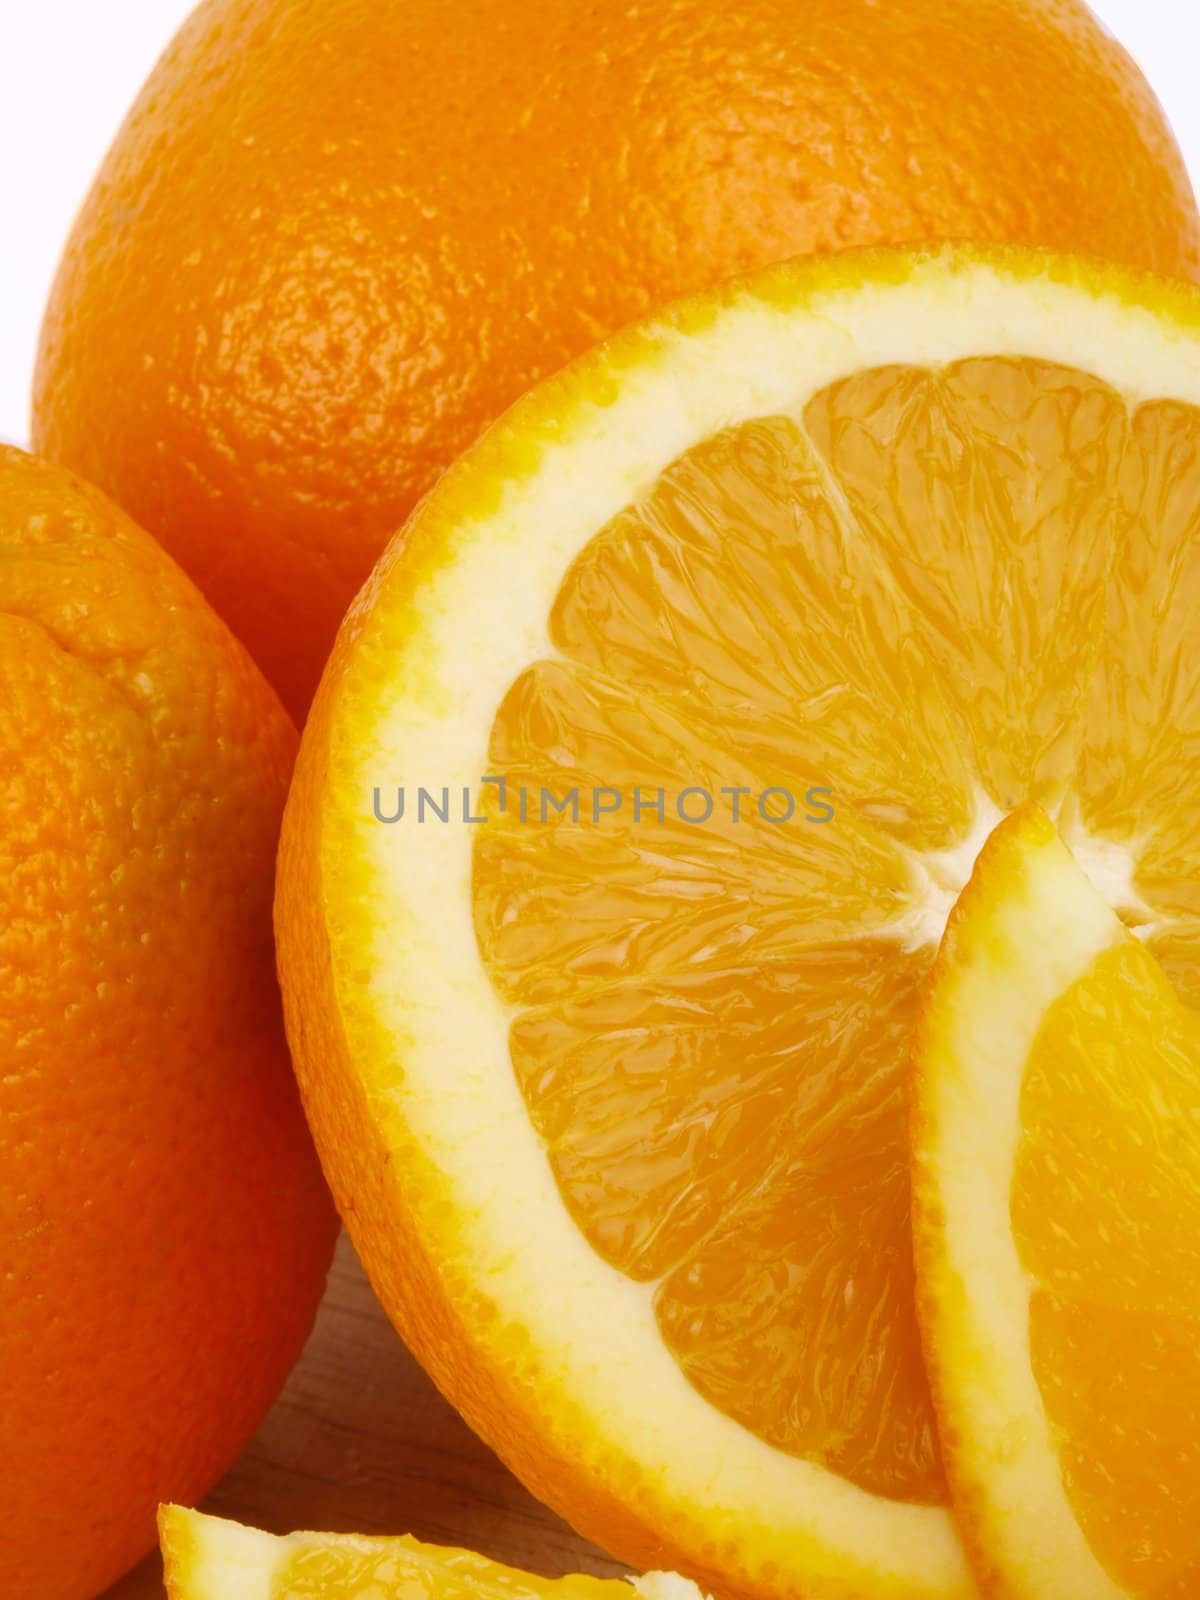 Oranges by dotweb